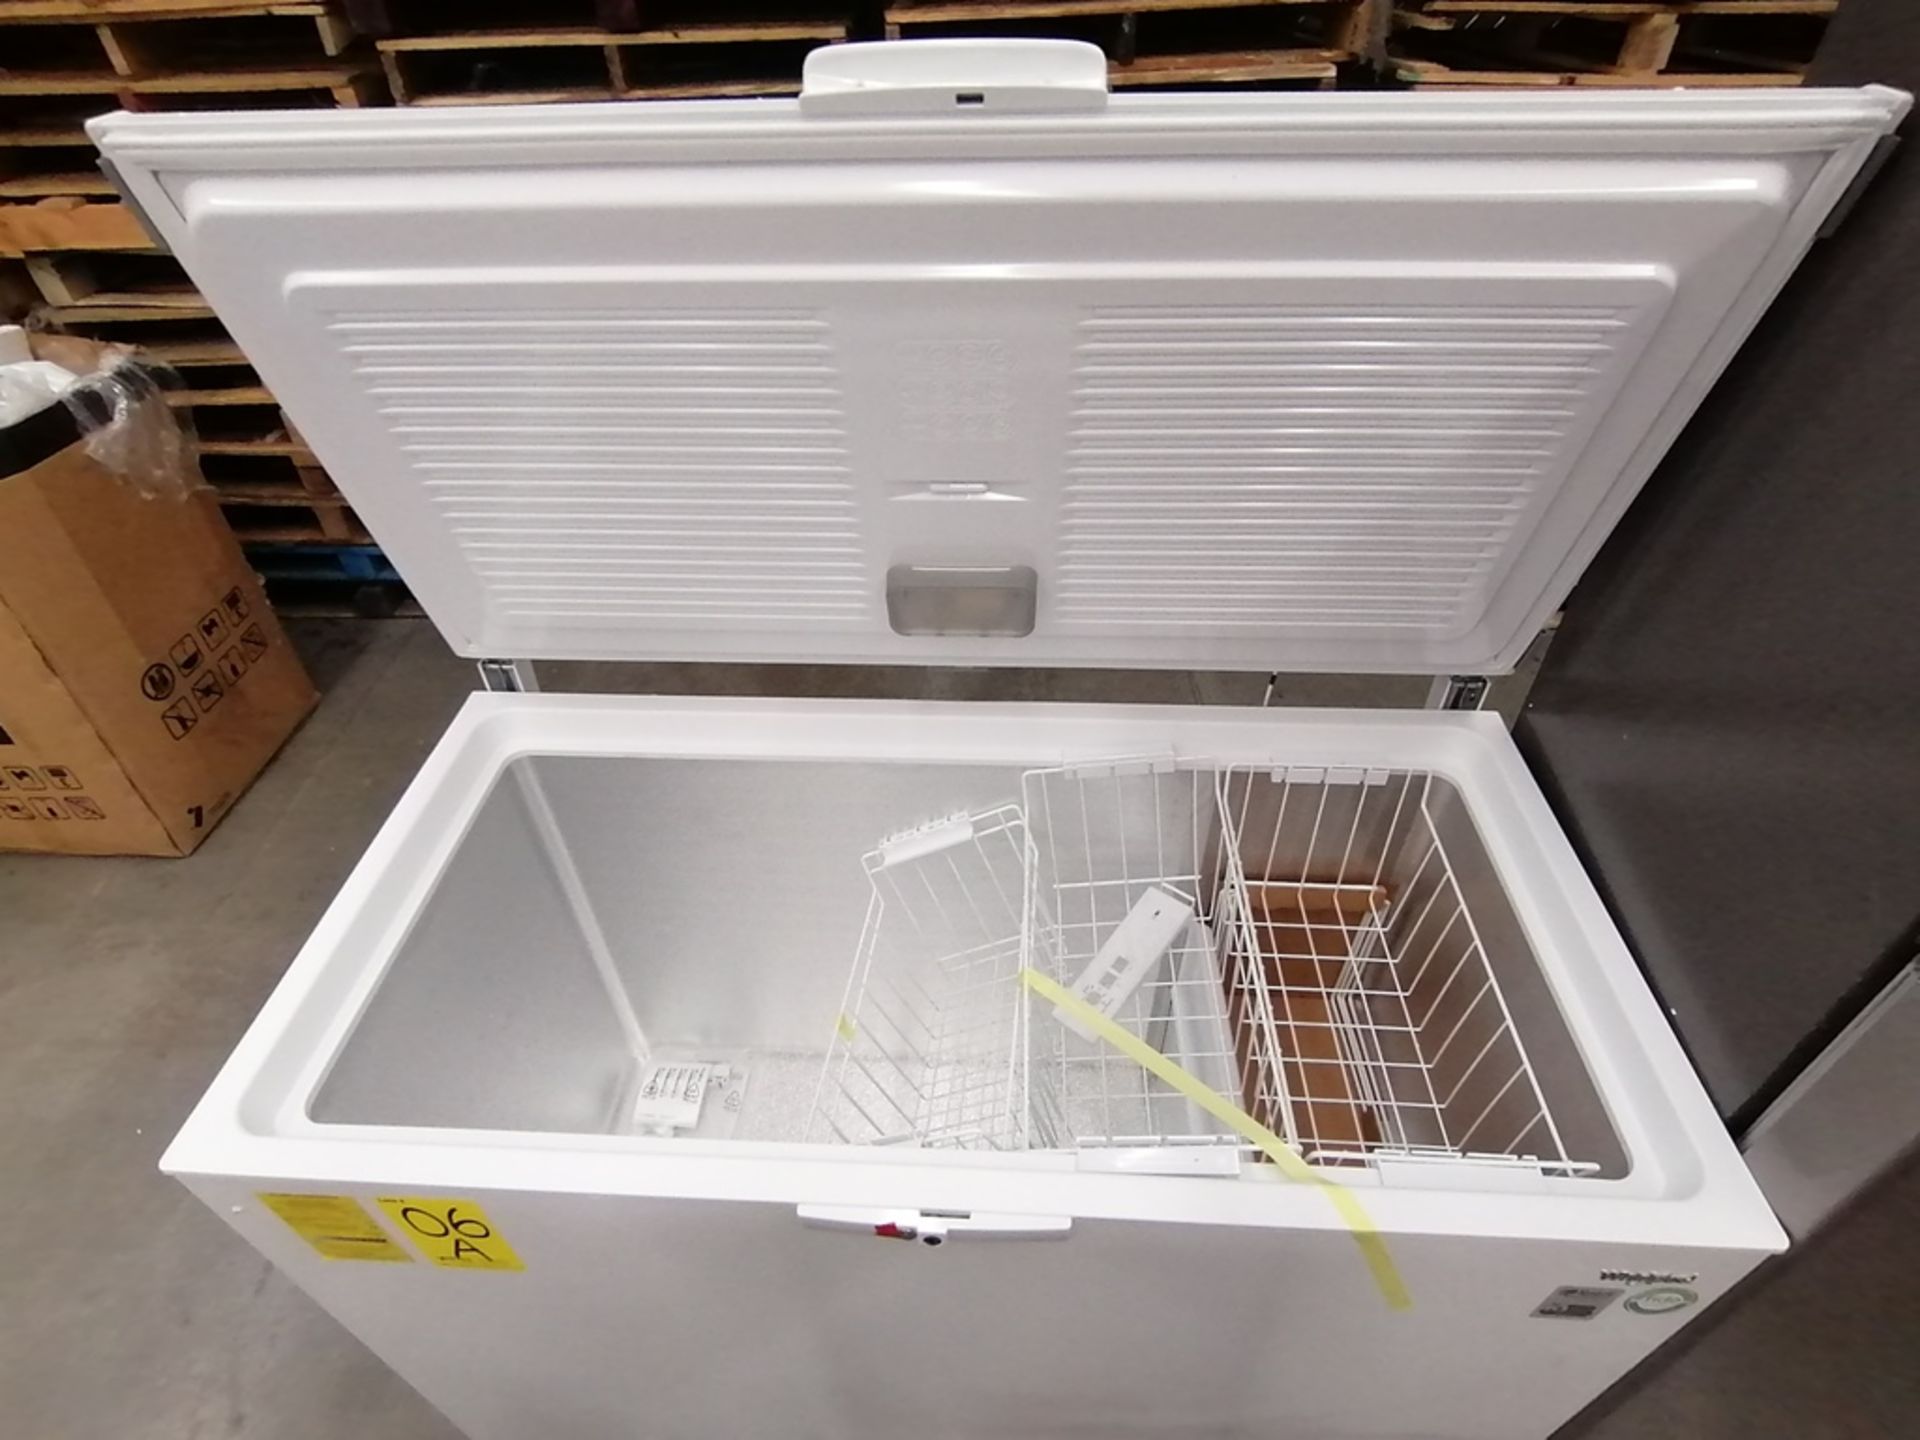 1 Congelador horizontal marca Whirlpool, Modelo WC16016Q, Serie 754959966031, Color Blanco, Golpead - Image 8 of 9